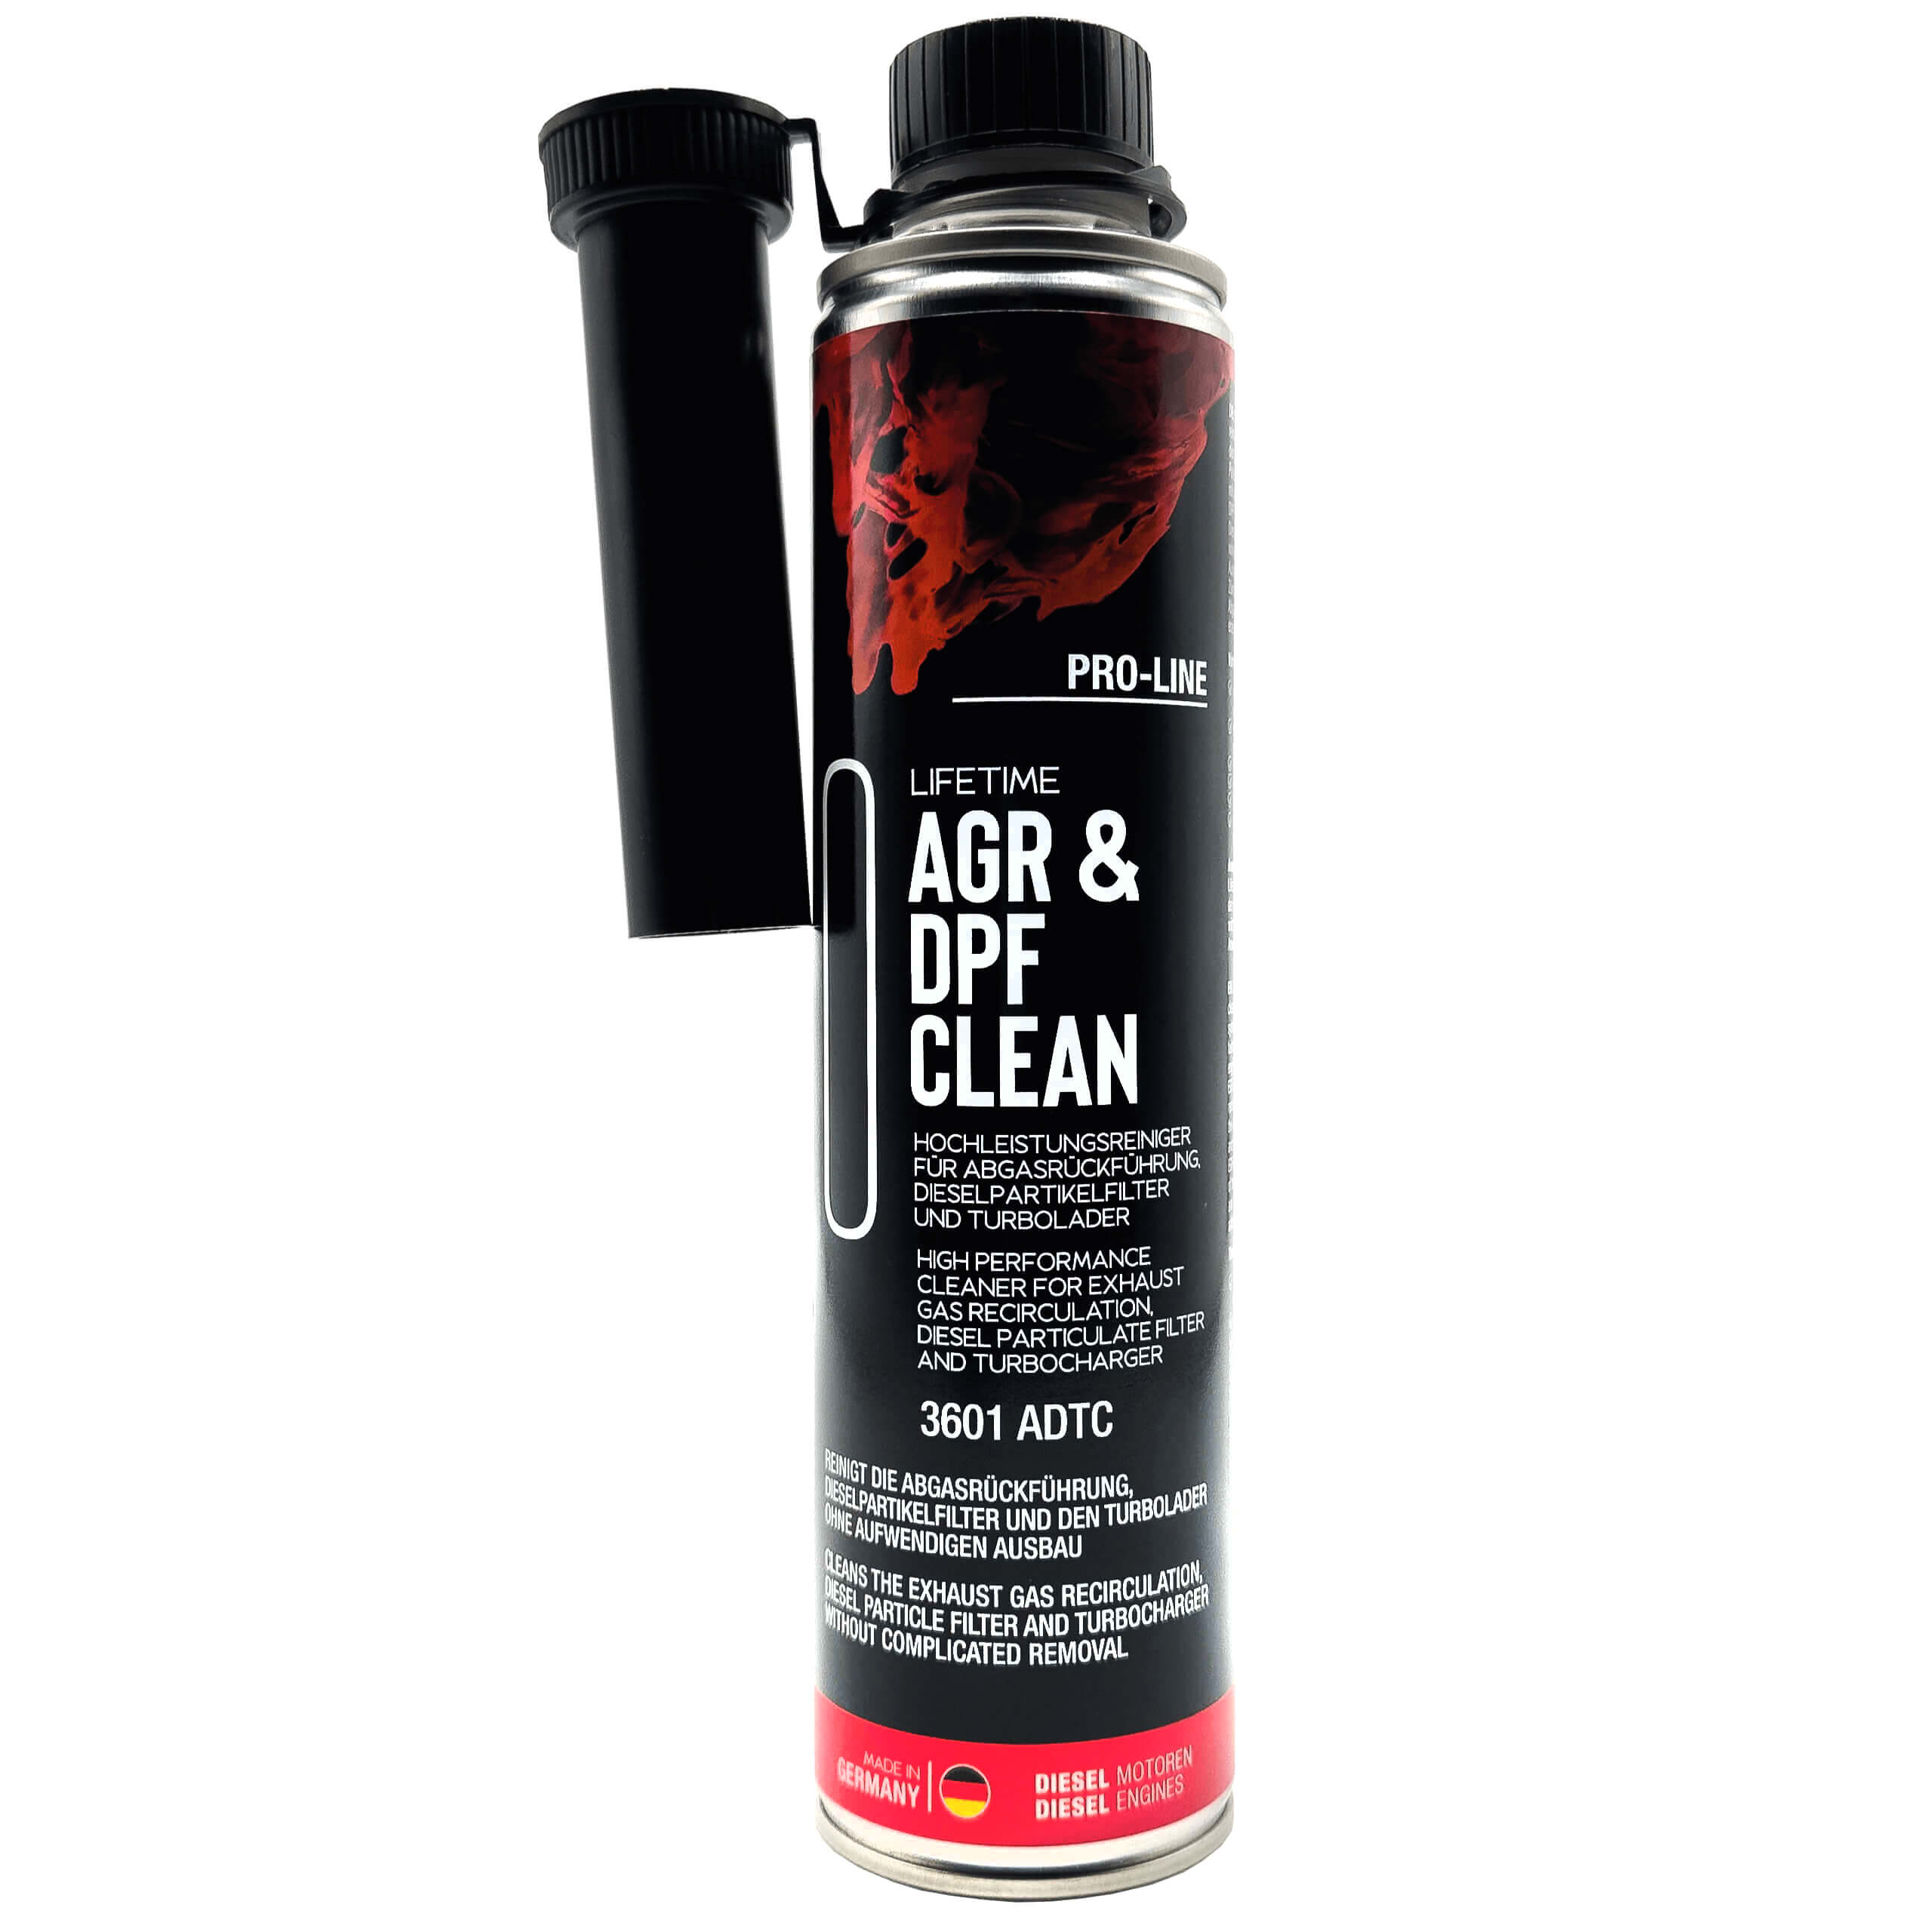 Lifetime AGR & DPF CLEAN Pro-Line | Diesel Additiv | 400 ml